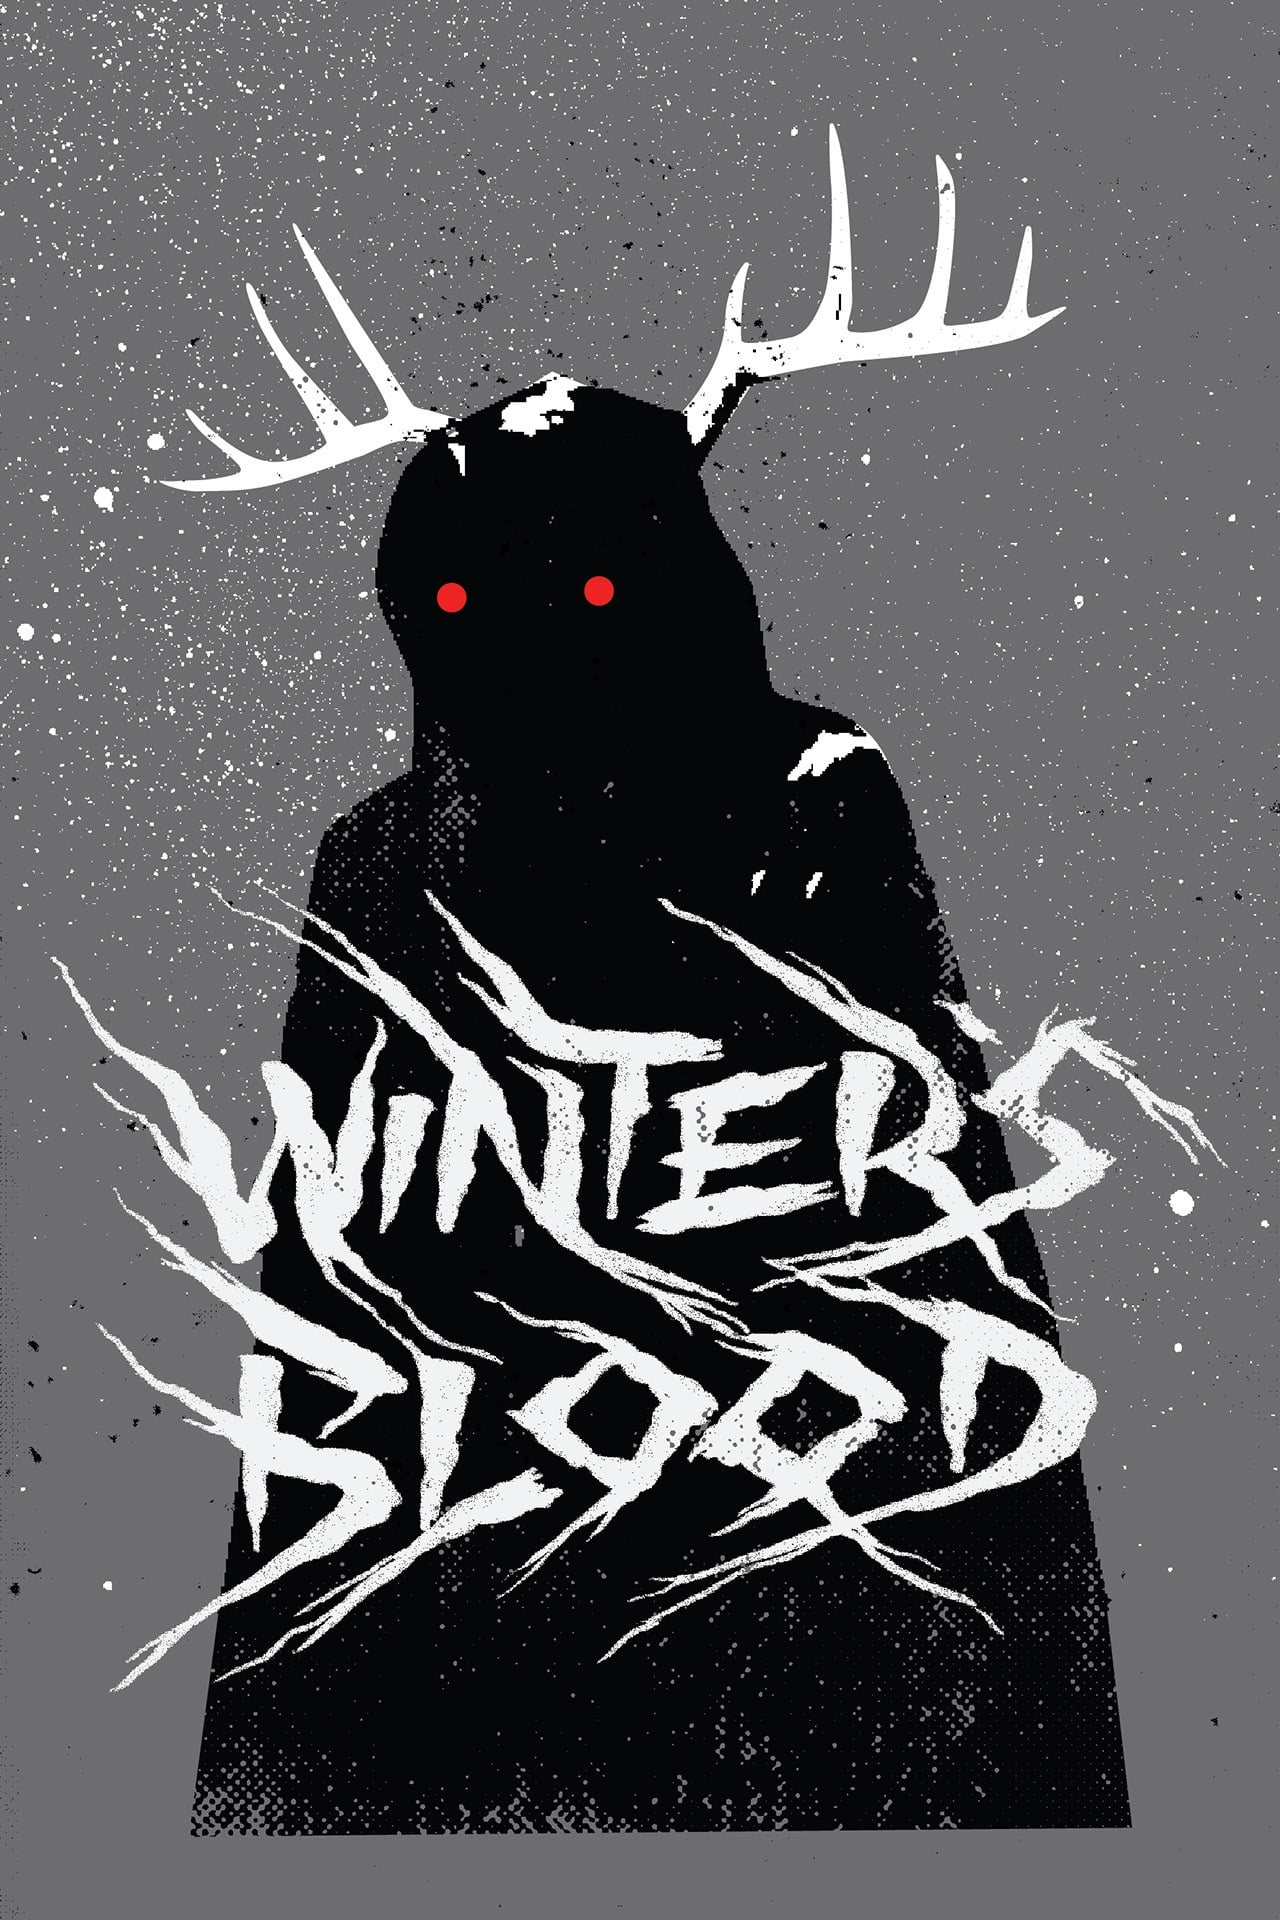 Winter's Blood